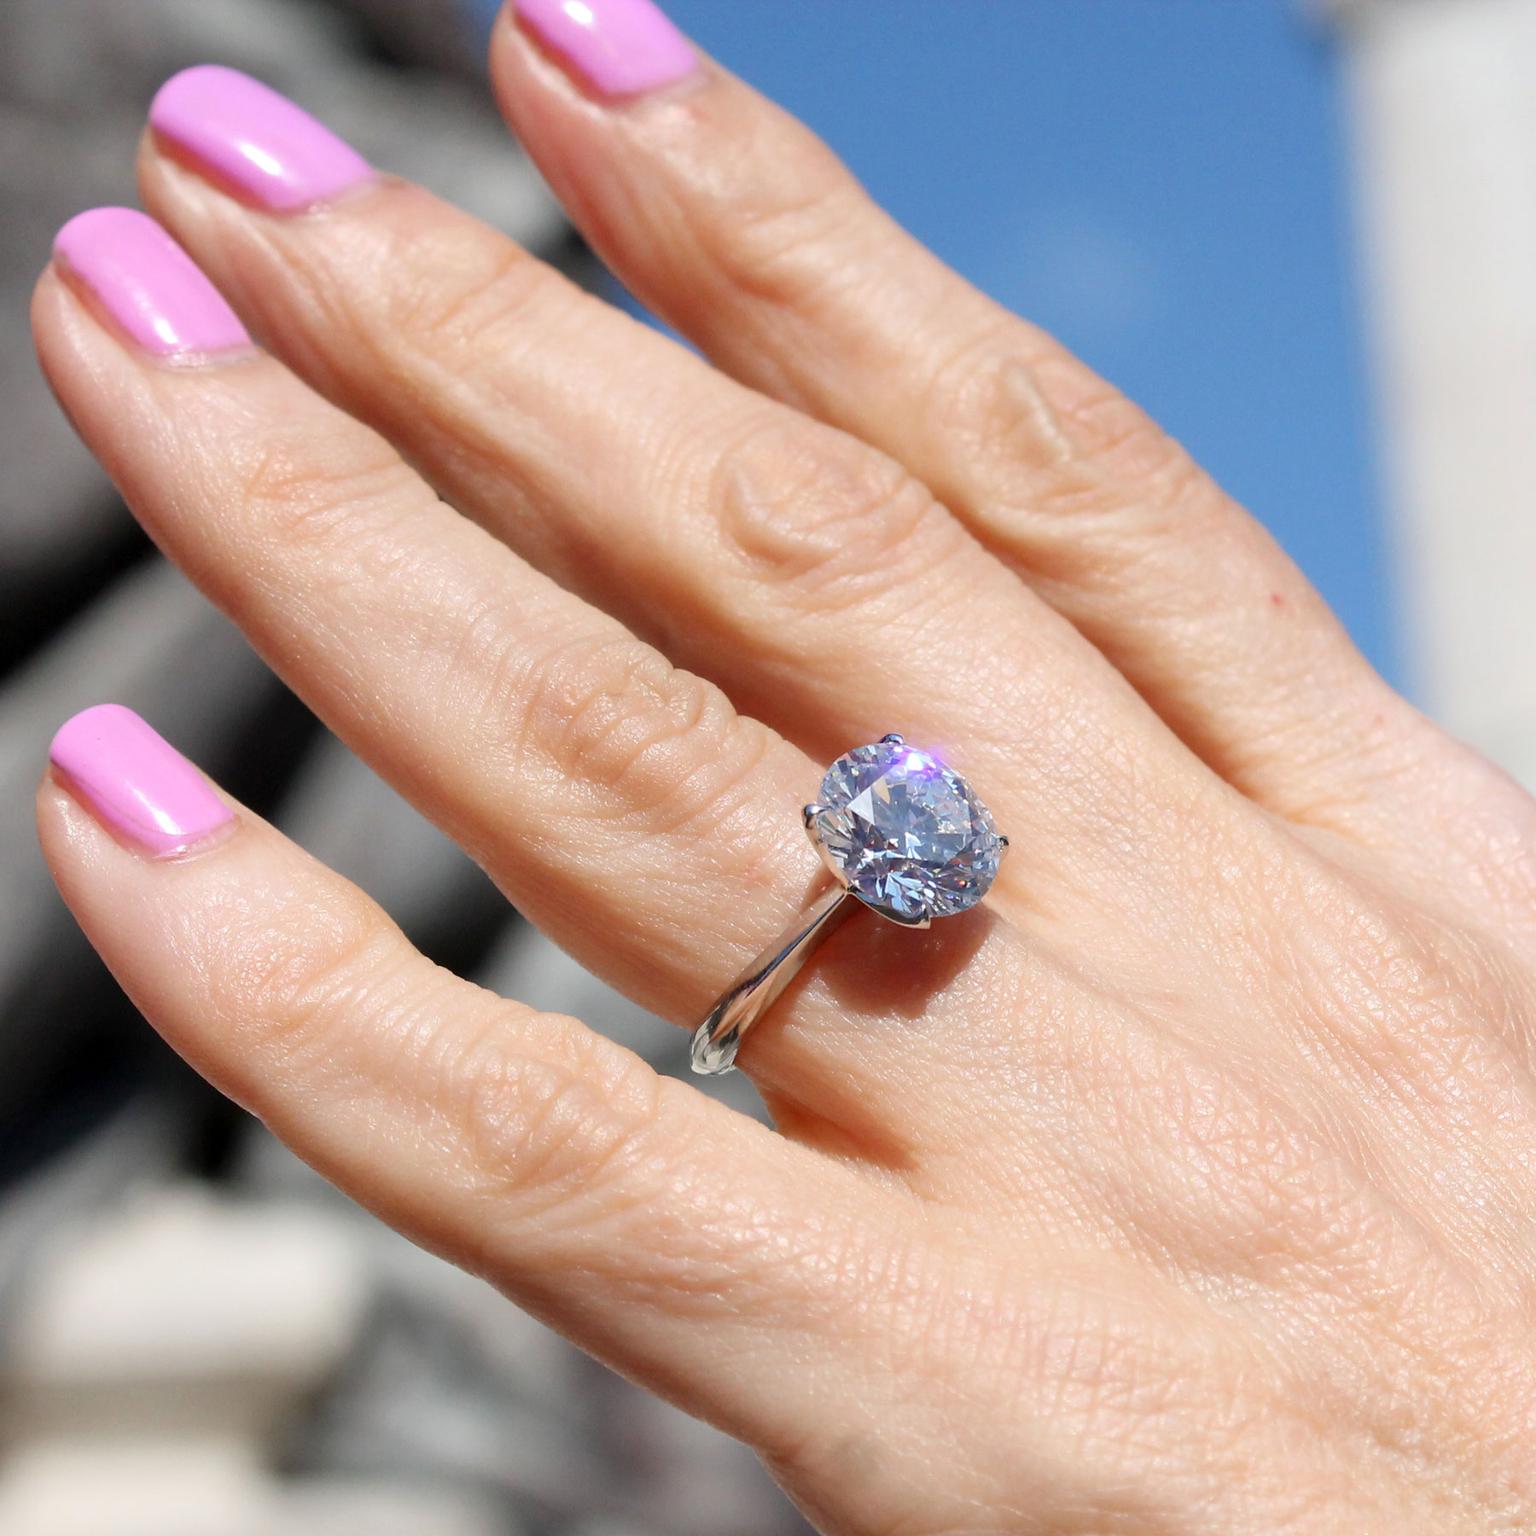 Aenea 5.21 carat diamond engagement ring